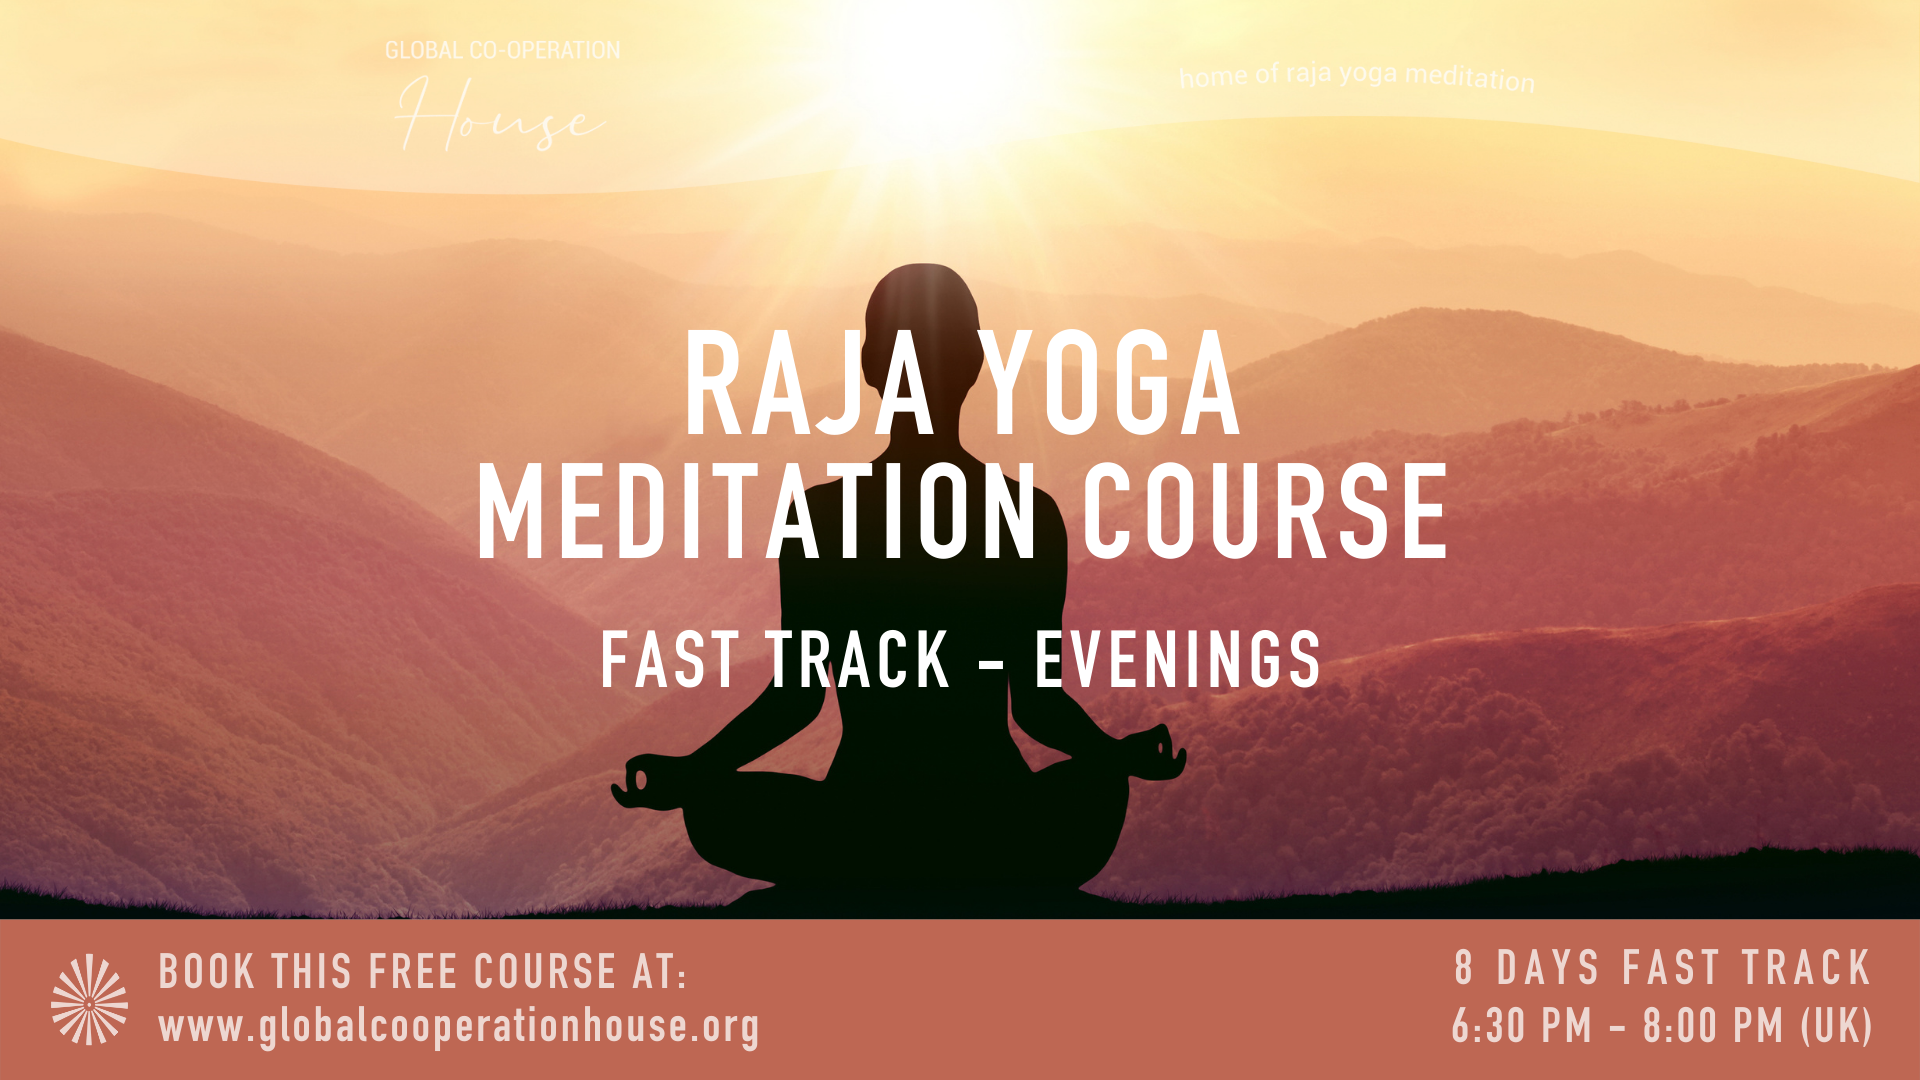 Raja Yoga 8-Day Fast Track Meditation Course - Evenings